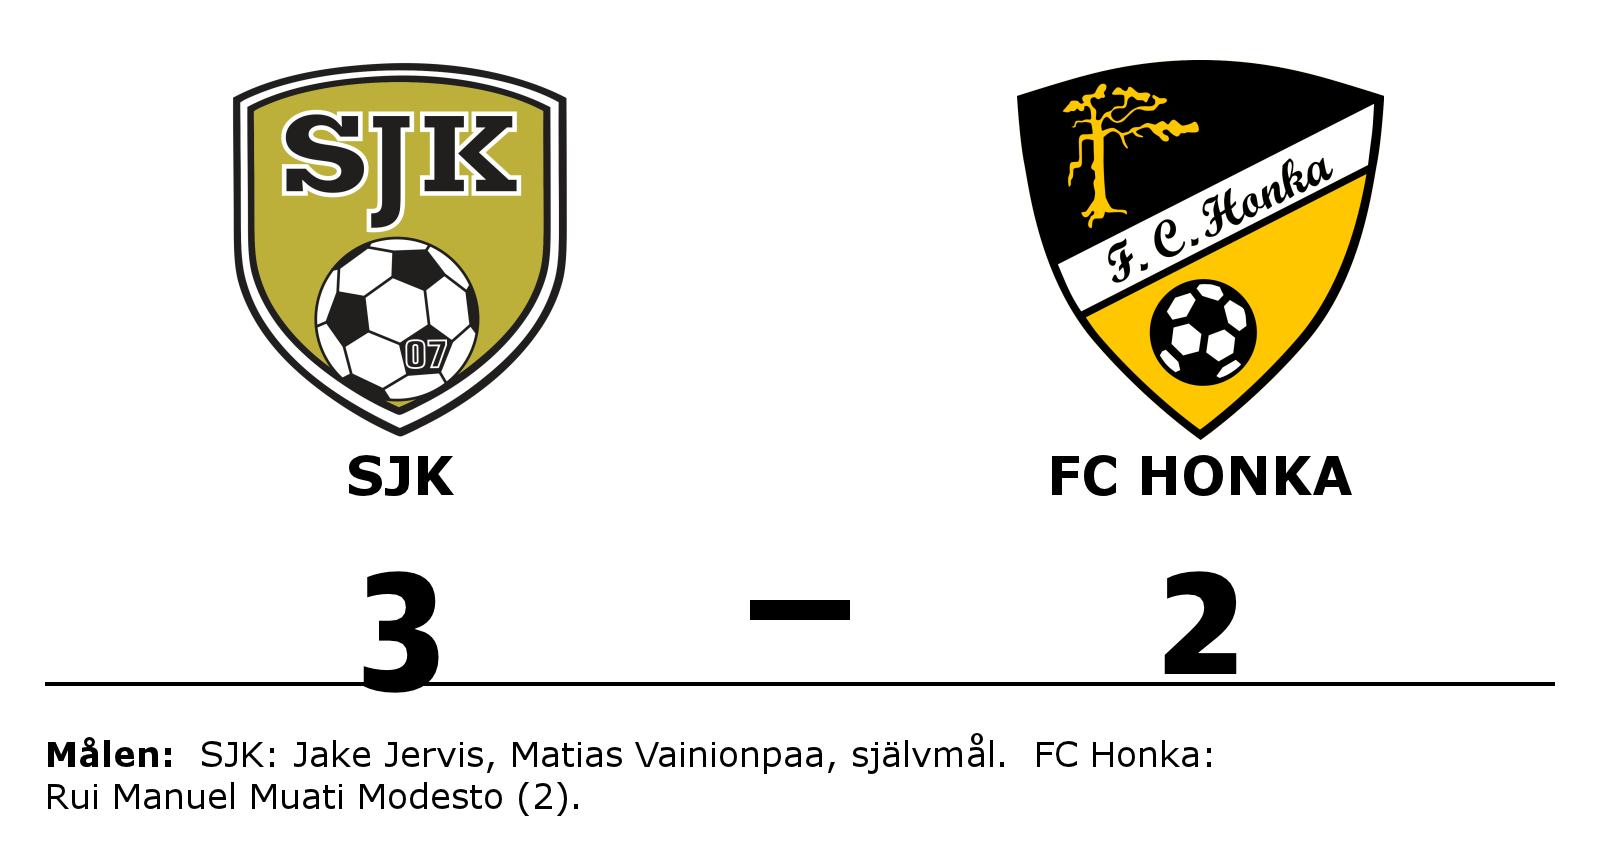 SJK vann mot FC Honka